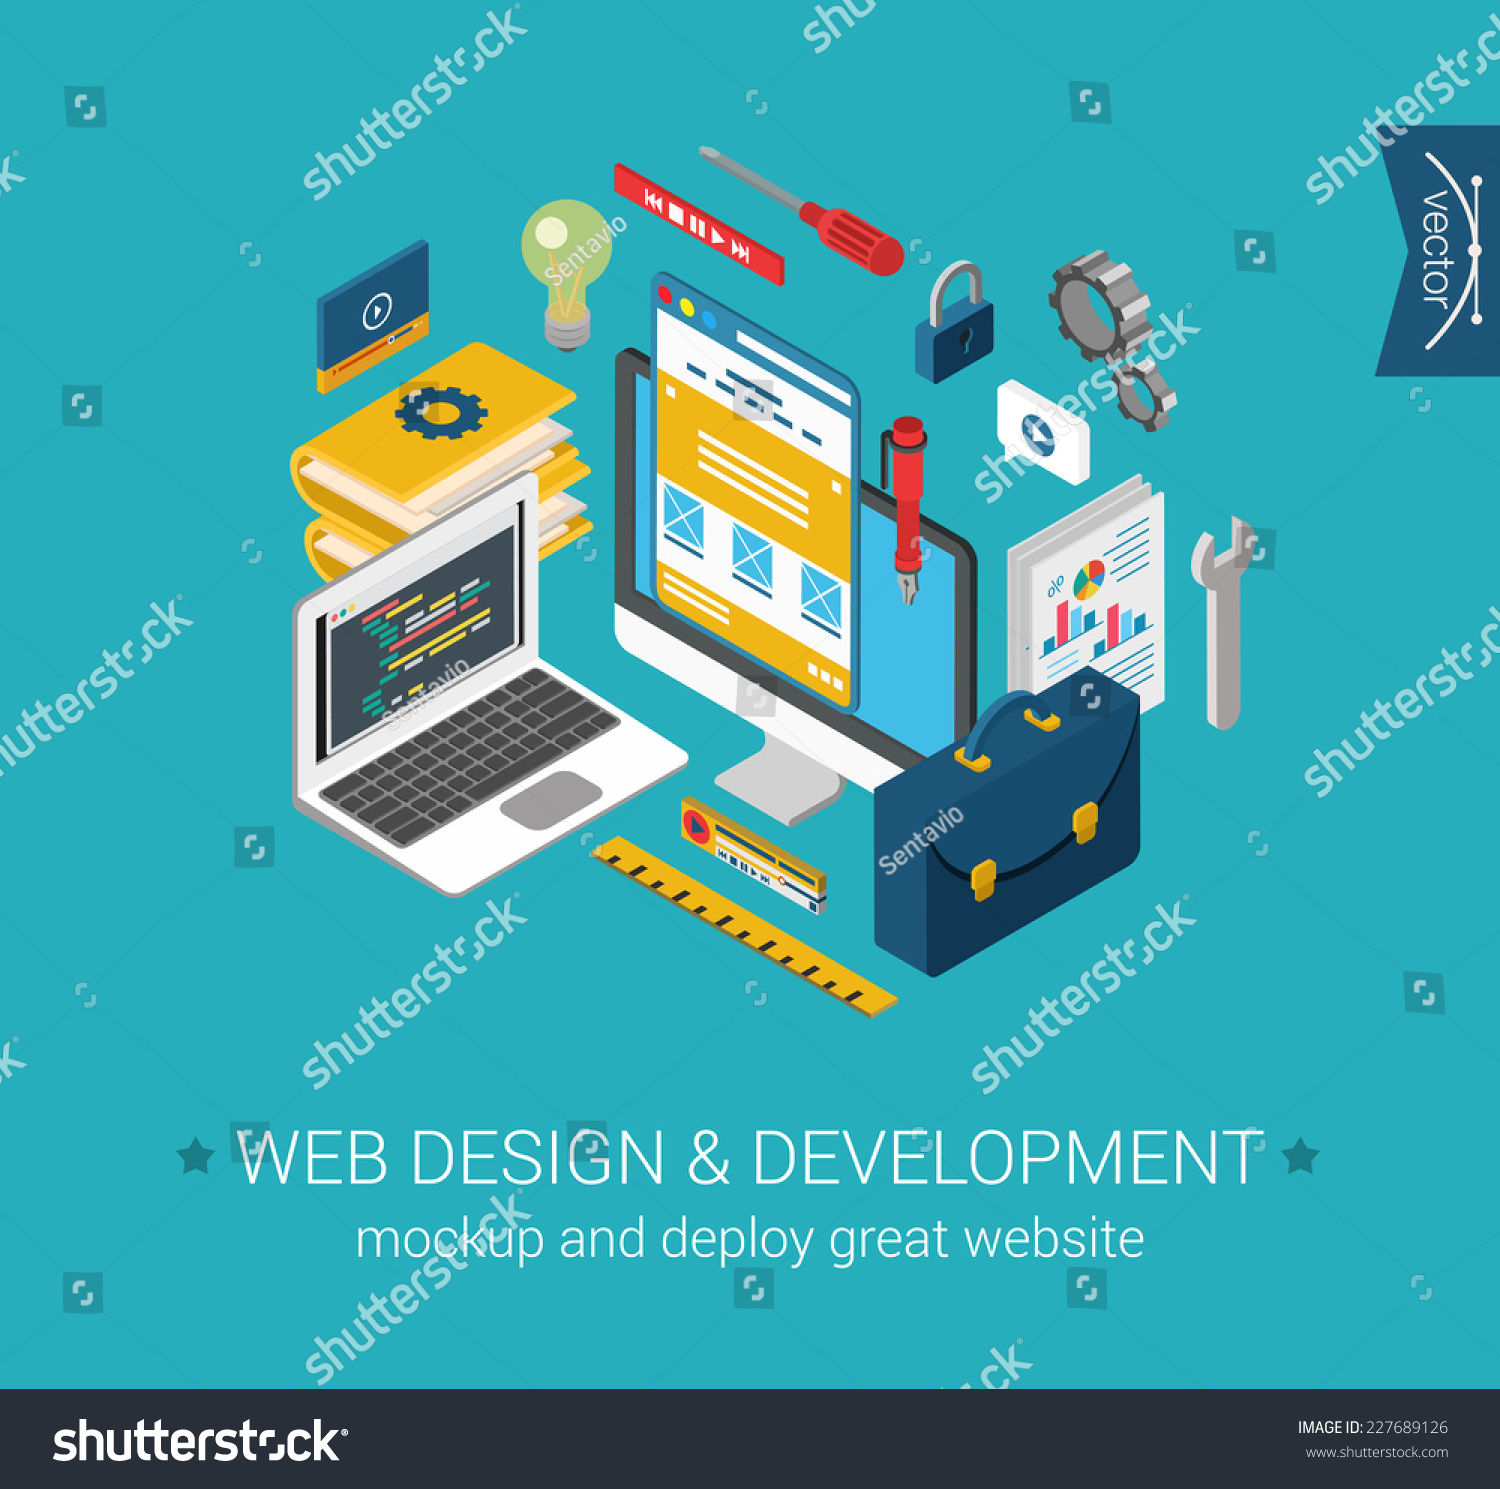 BS in Web Design & Development